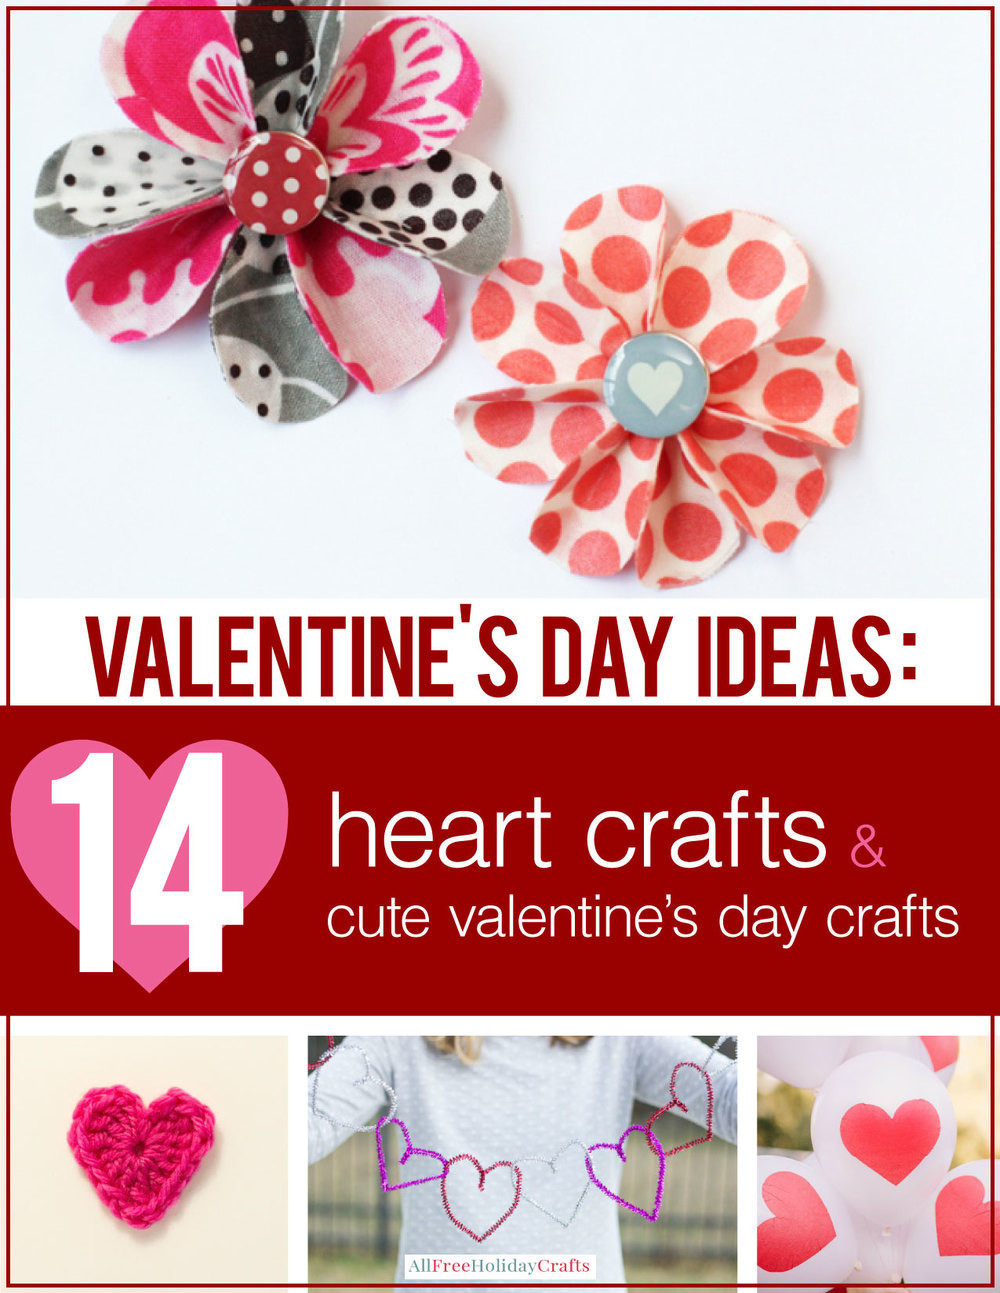 Valentines Day Ideas Crafts
 "Valentine s Day Ideas 14 Heart Crafts and Cute Valentine